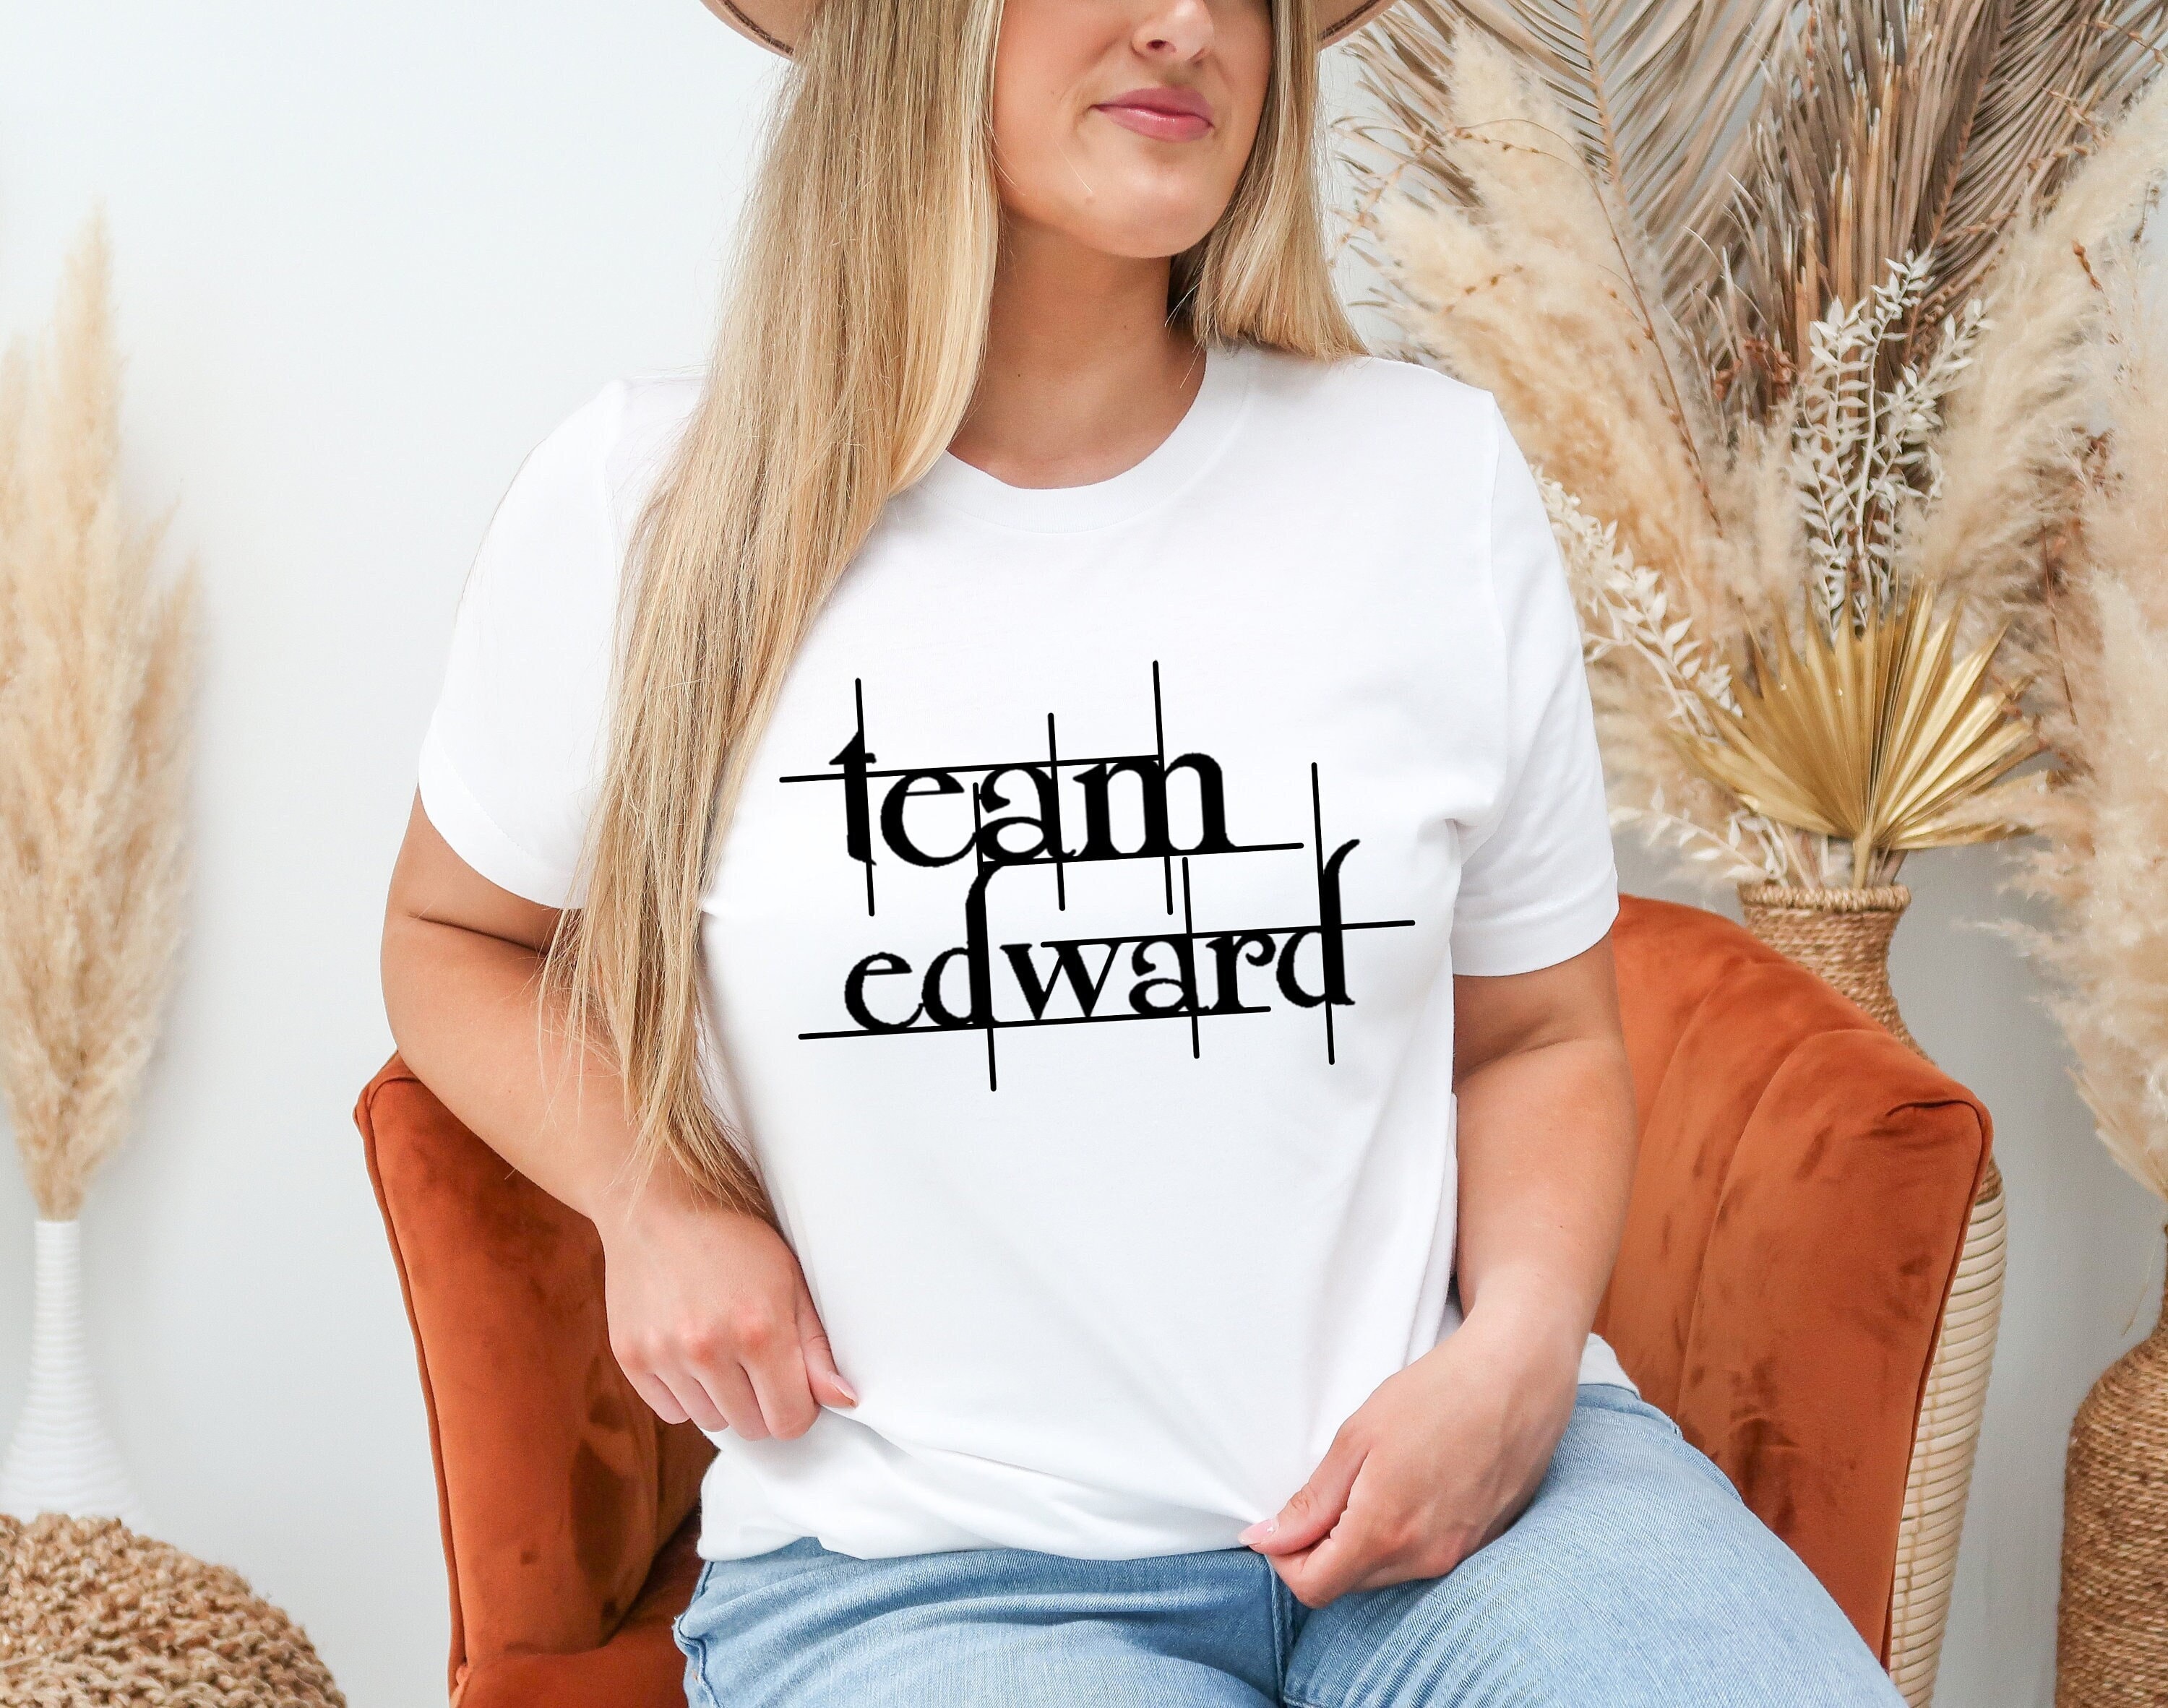 Edward-Team Edward vintage baseball font swoosh' Women's T-Shirt